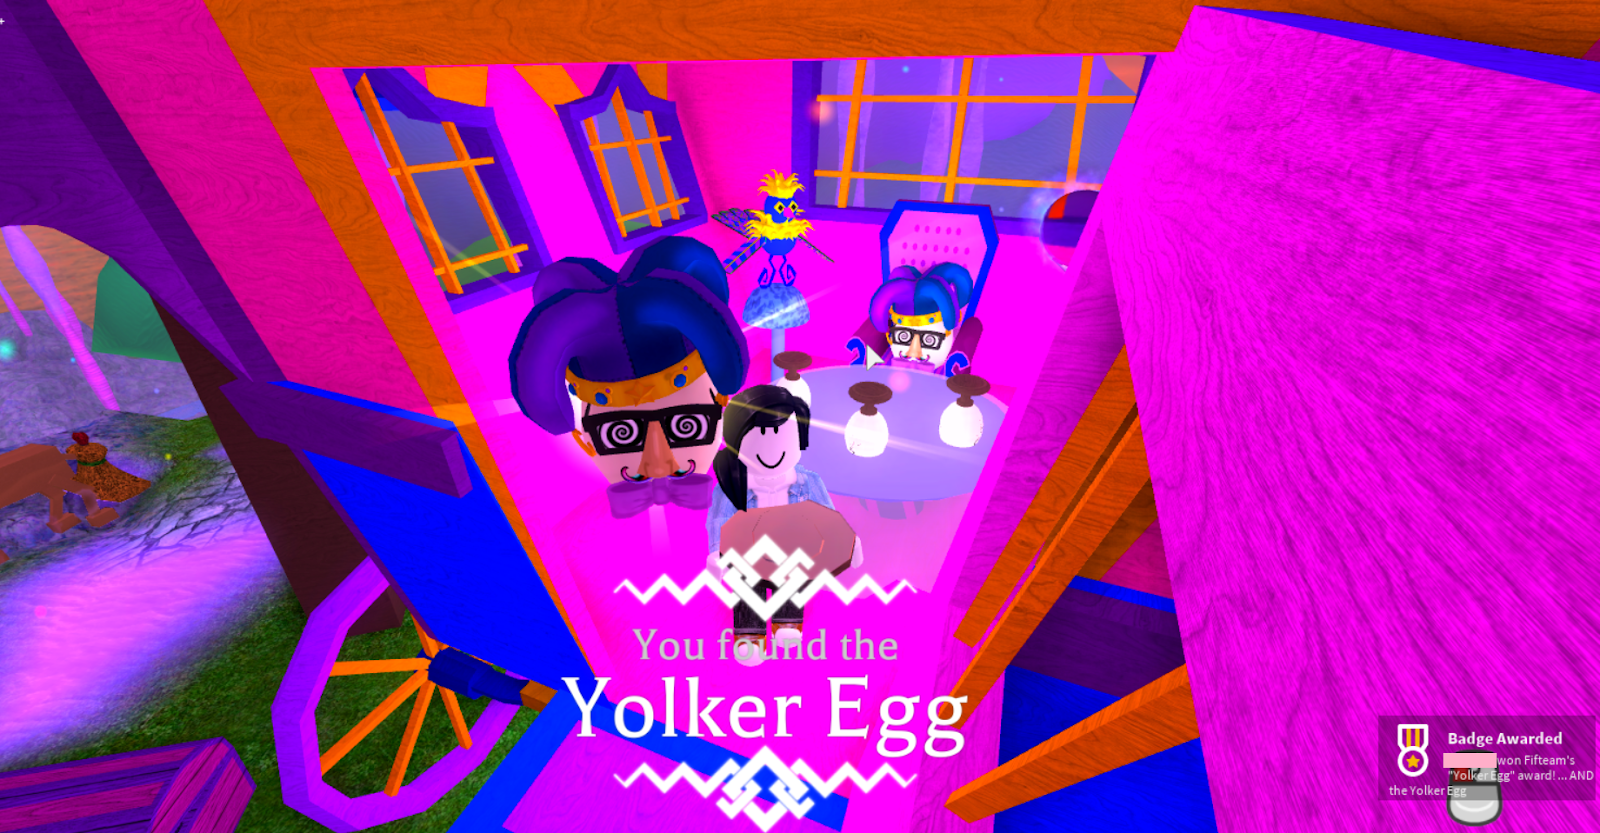 Aveyn S Blog Roblox Egg Hunt 2018 How To Find All The Eggs In - roblox egg hunt 2018 how to get the party invite egg treasured